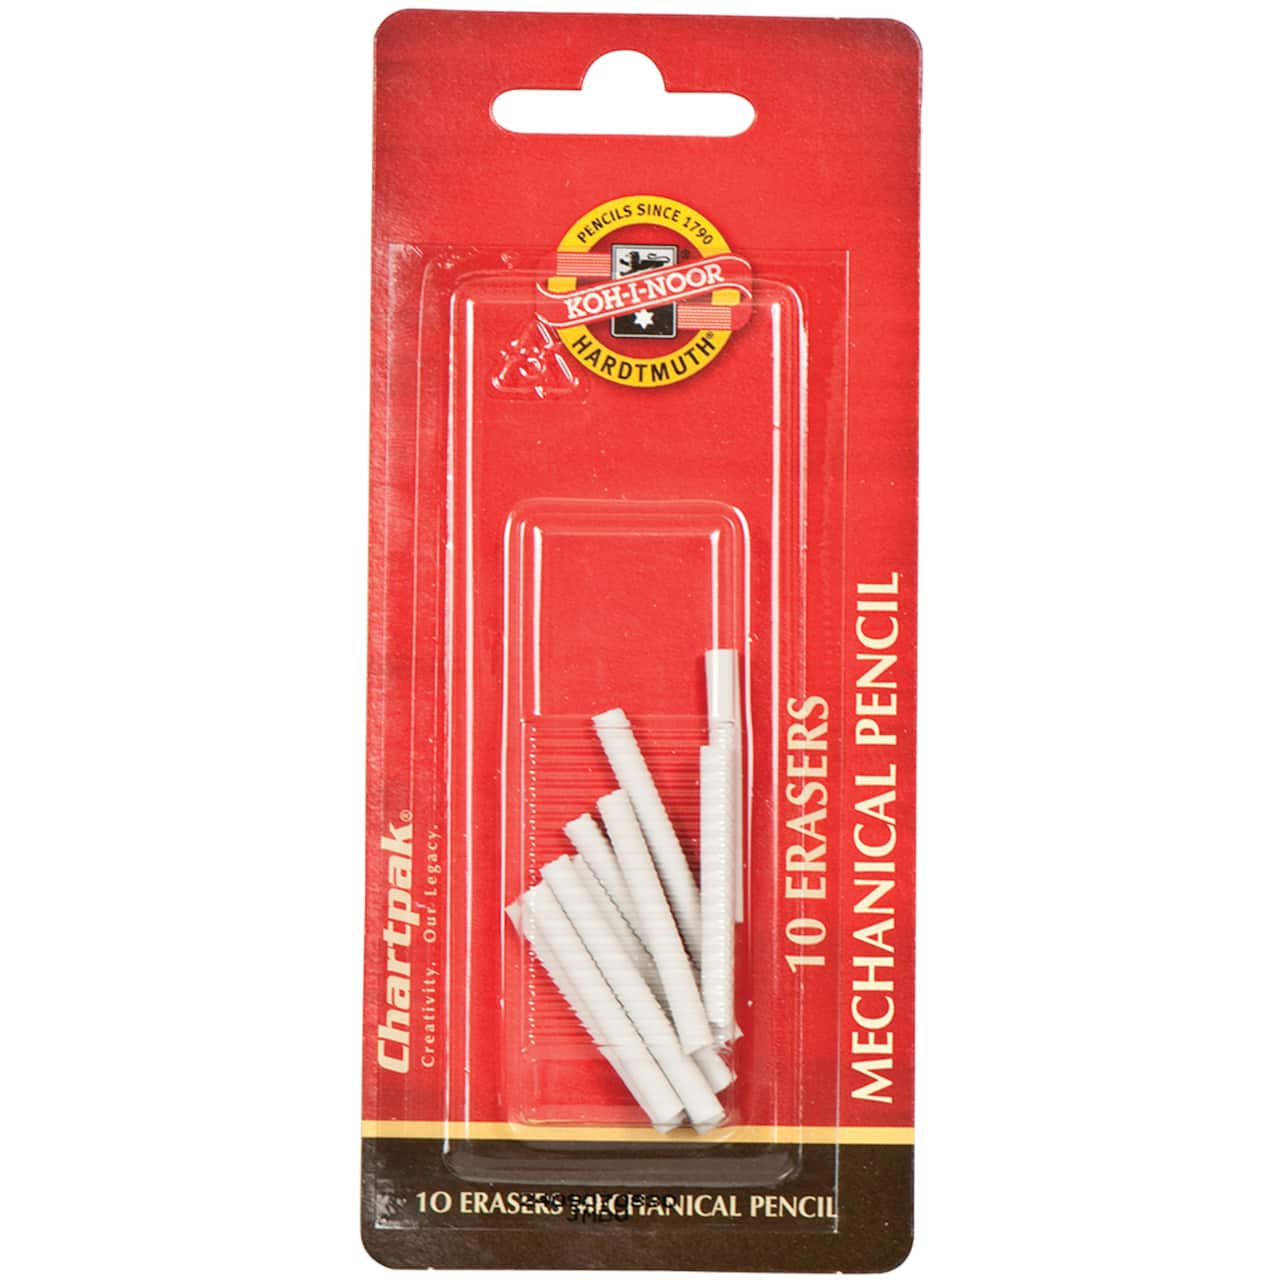 Koh-I-Noor Mechanical Pencil Eraser Refills